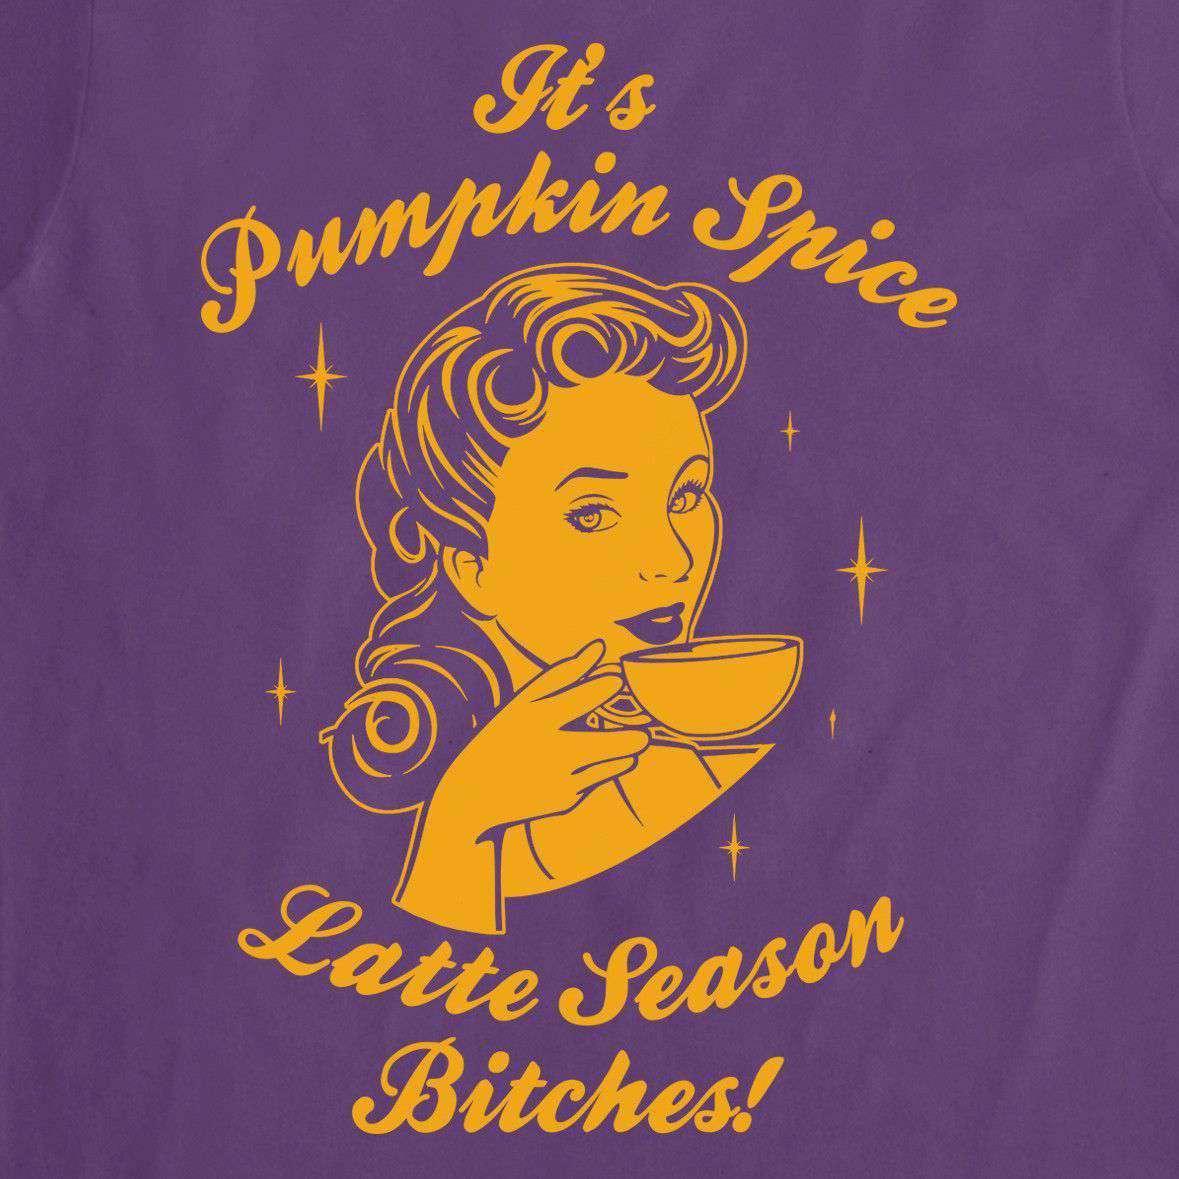 Autumn Pumpkin Spice Latte Season Illustration Womens Fitted T-Shirt 8Ball